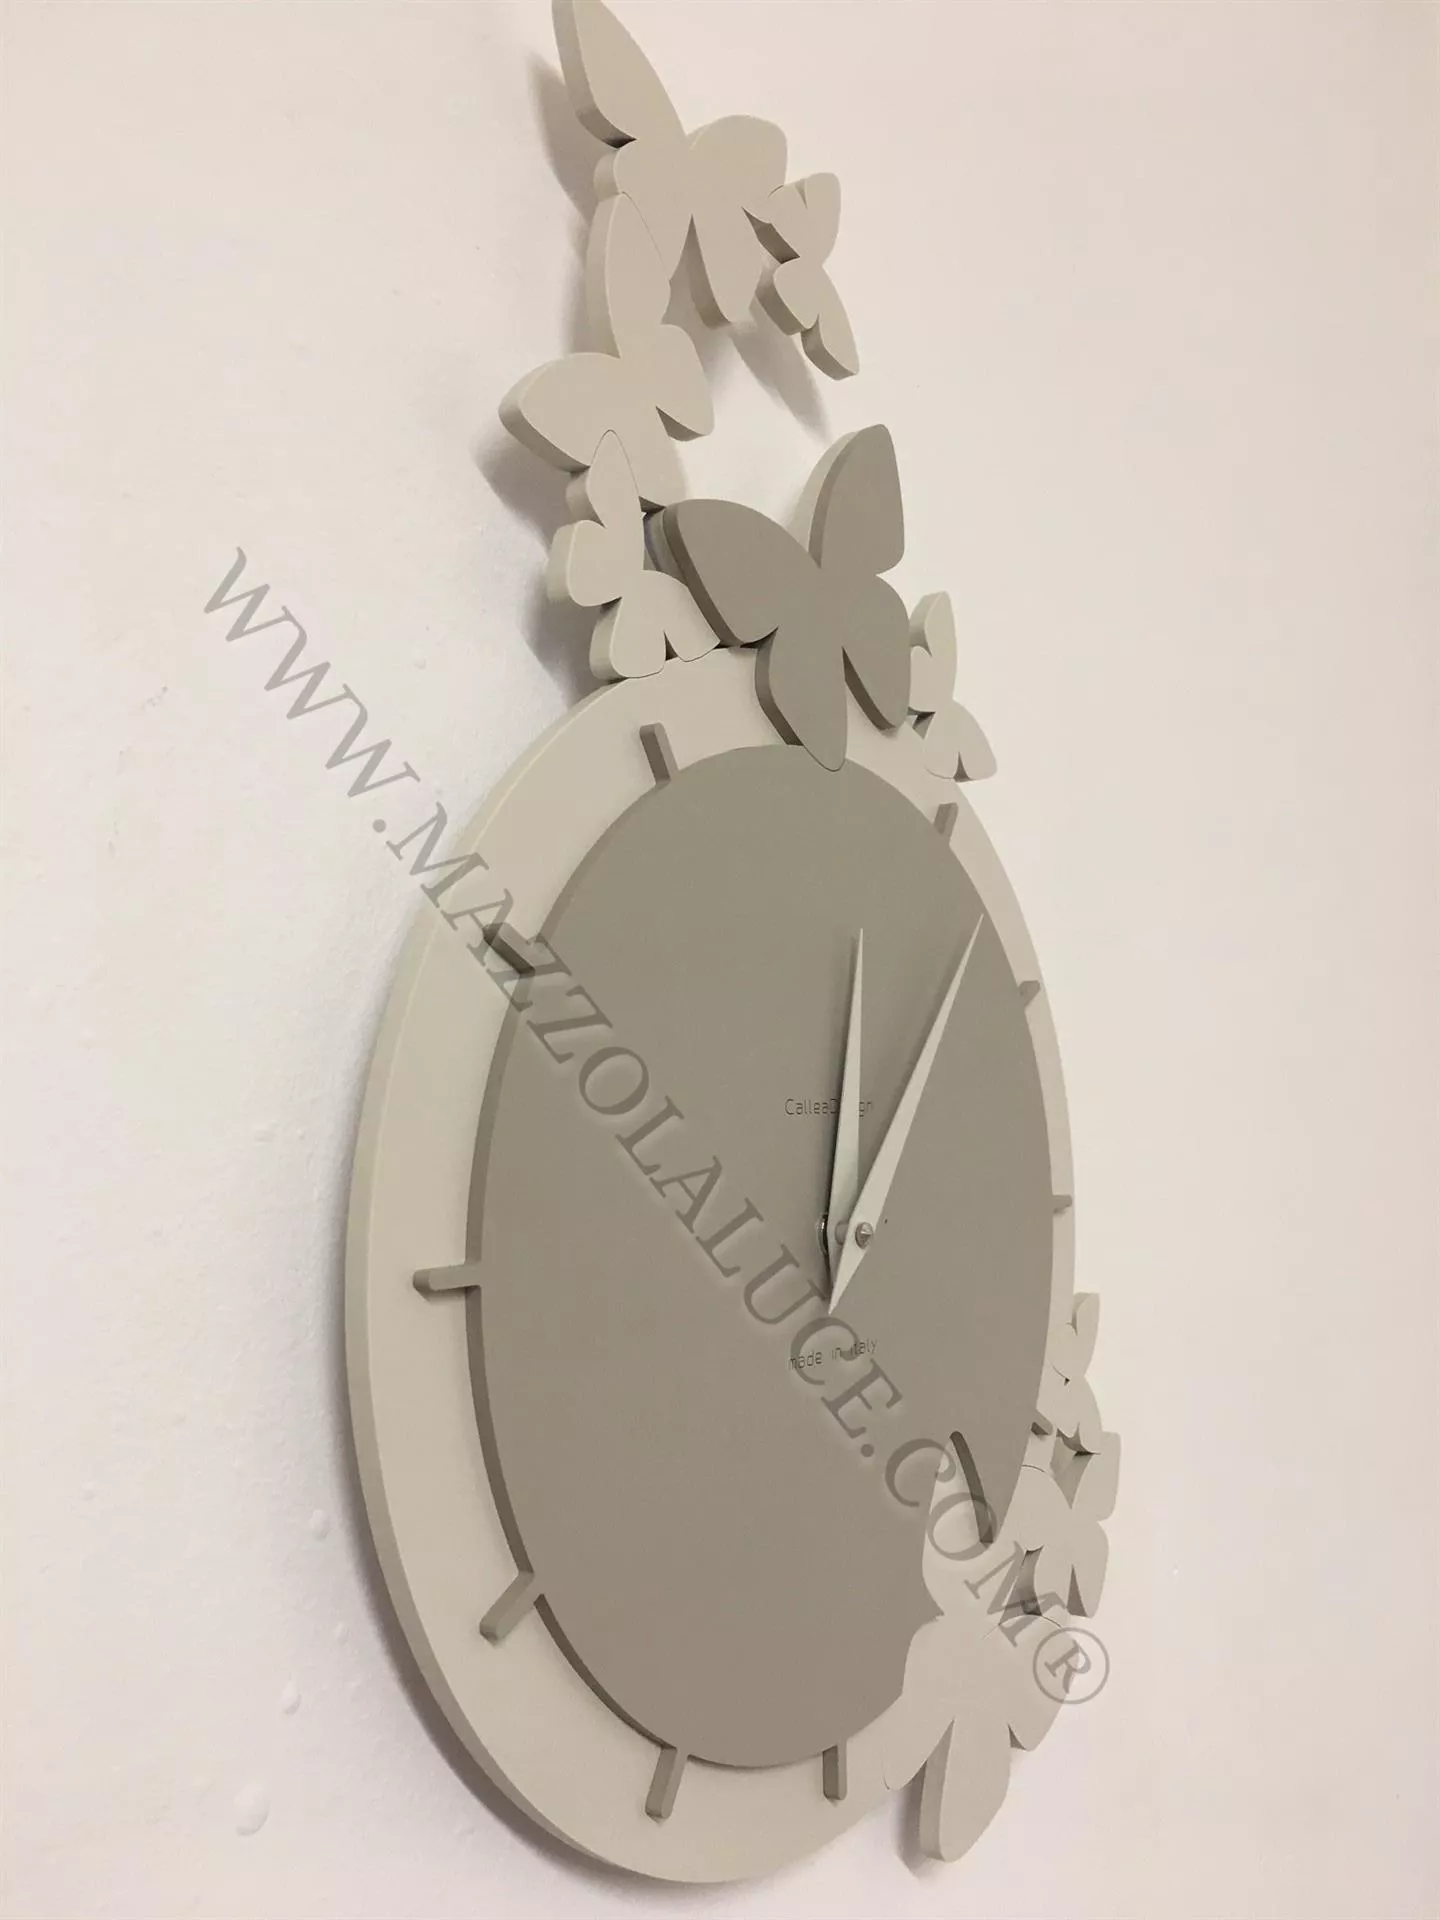 Callea design dancing butterfly wall clock dove grey - 50-10-2-13TORTO